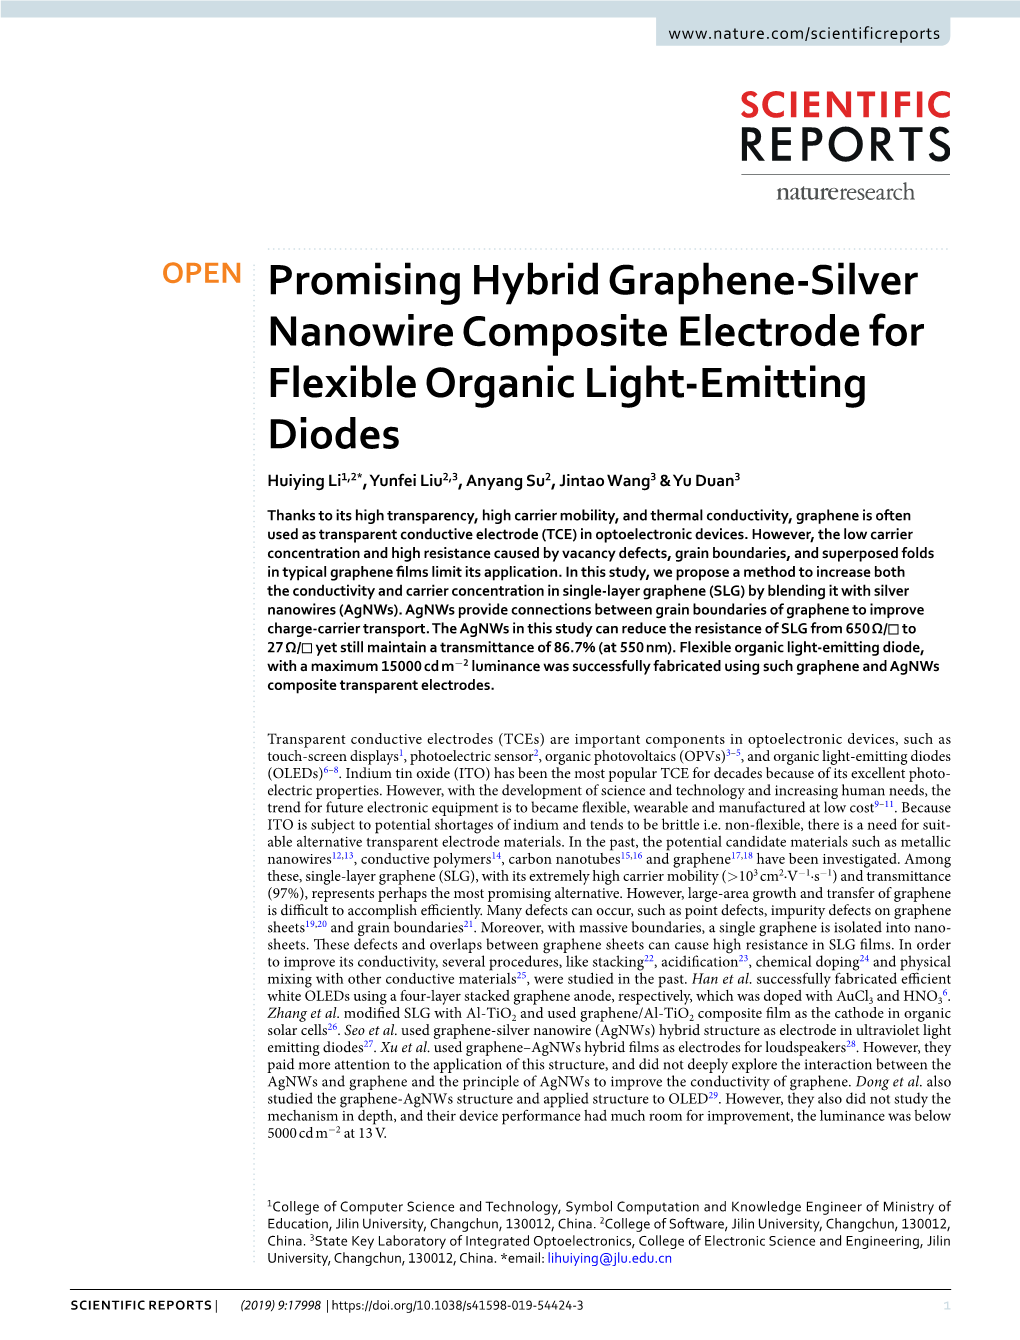 Promising Hybrid Graphene-Silver Nanowire Composite Electrode For